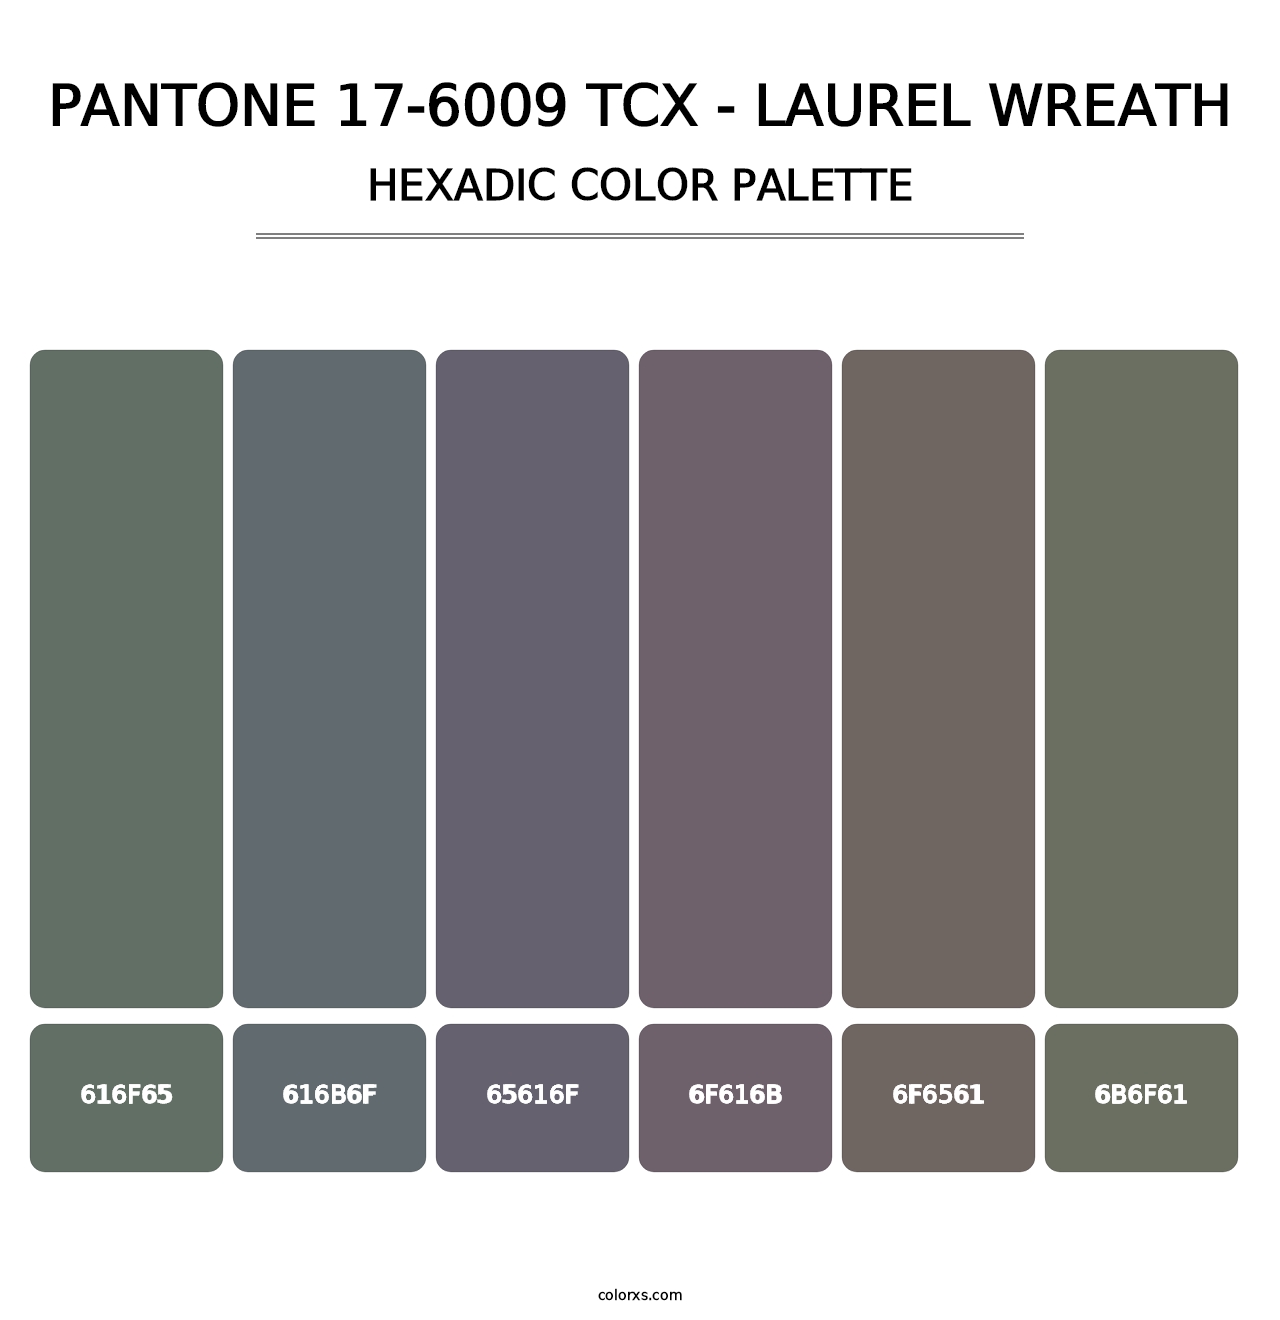 PANTONE 17-6009 TCX - Laurel Wreath - Hexadic Color Palette